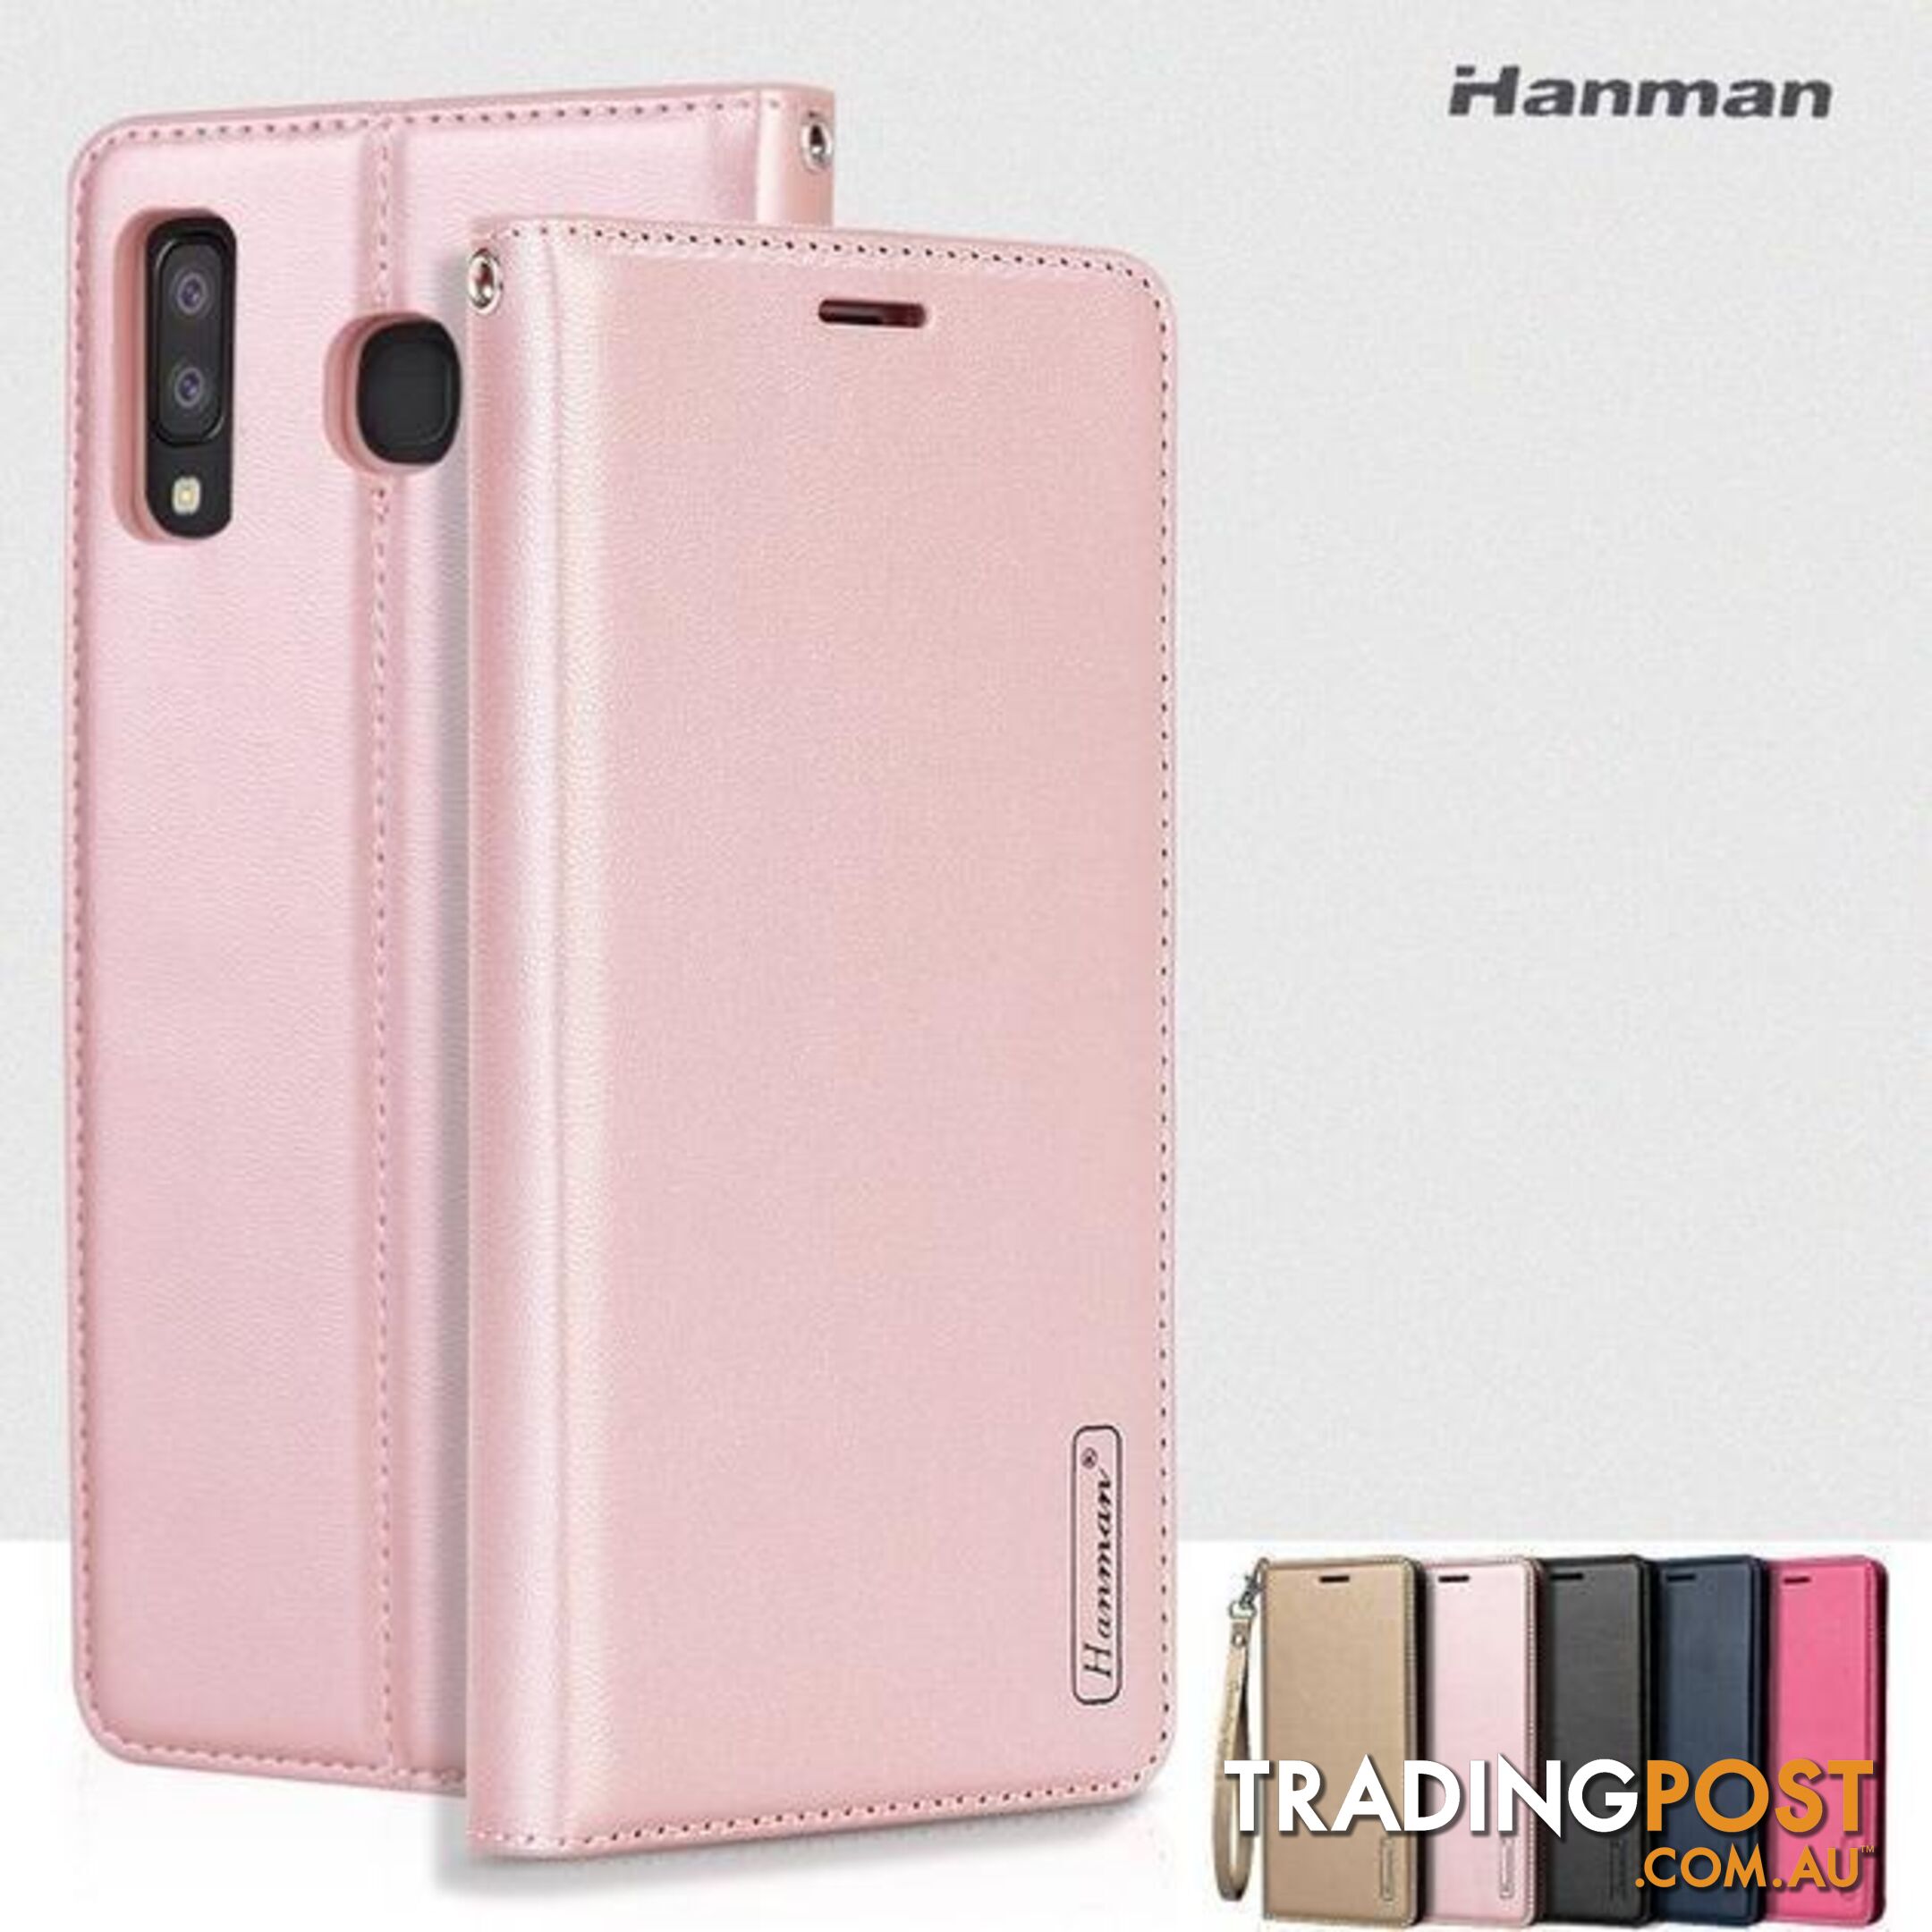 Samsung Galaxy Hanman Wallet Style Cases - 100844 - Cases